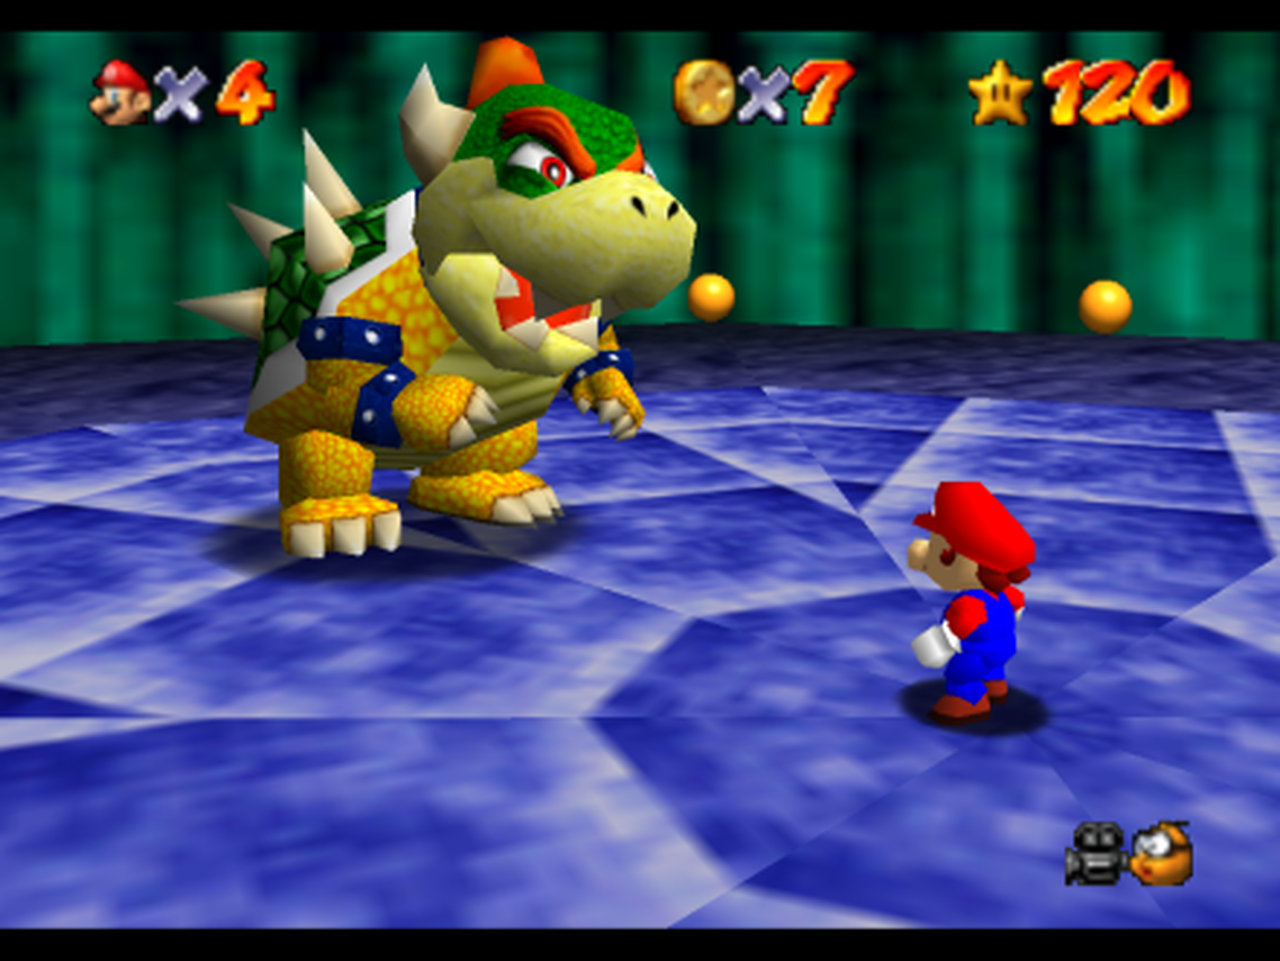 Mario besiegt Browser. (Bild: Nintendo)